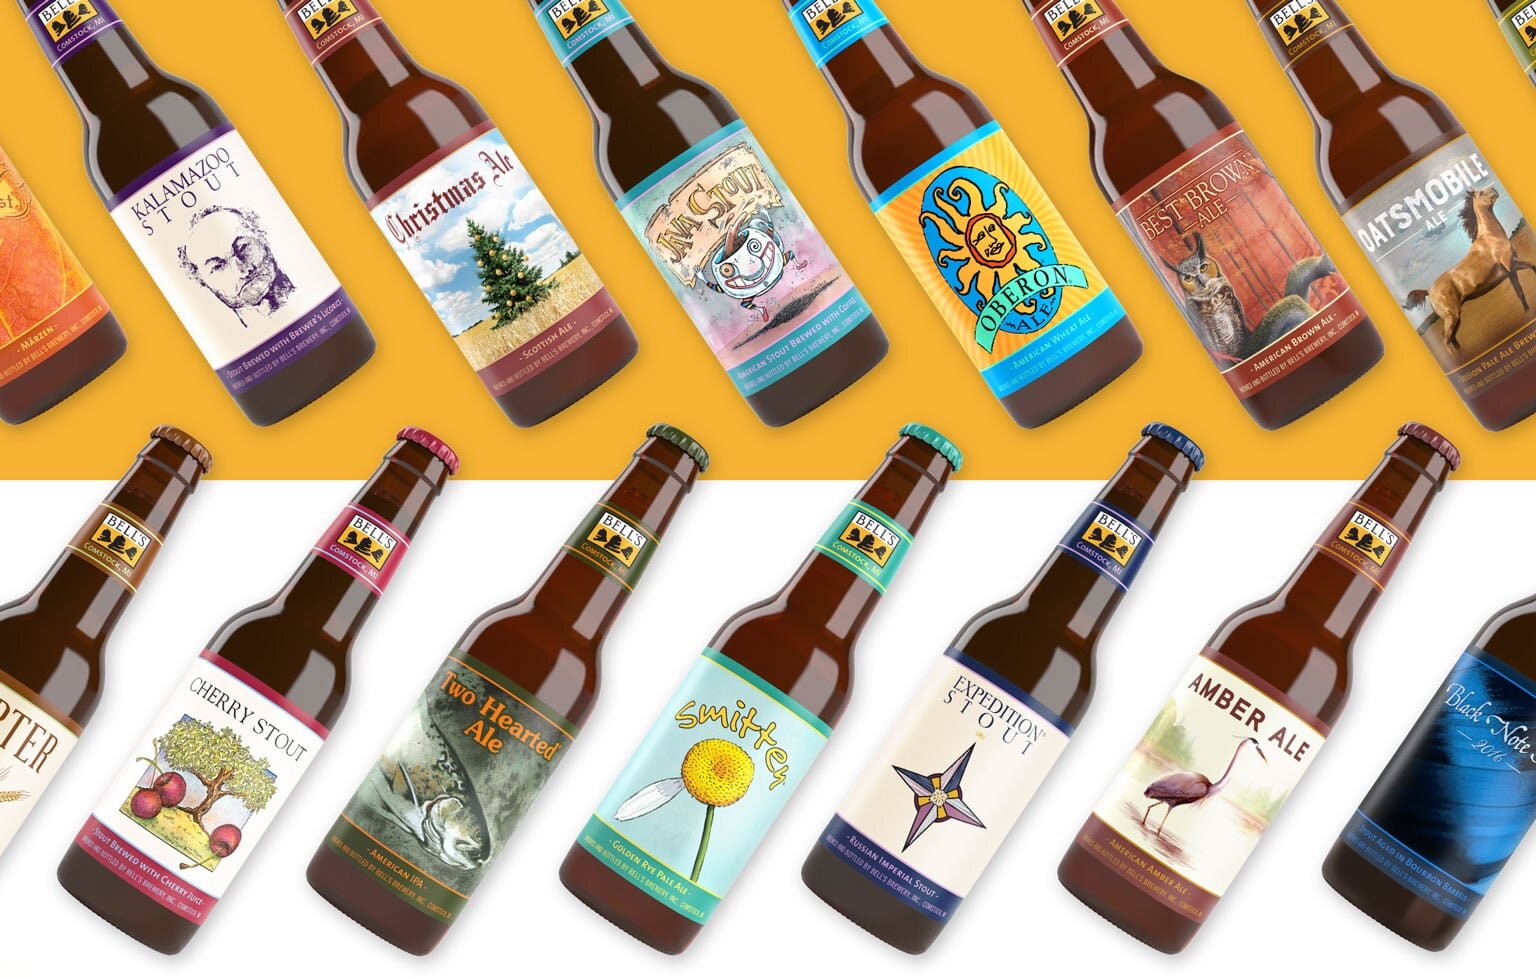  Image of variety of beer brand designs on 12 oz. bottles 